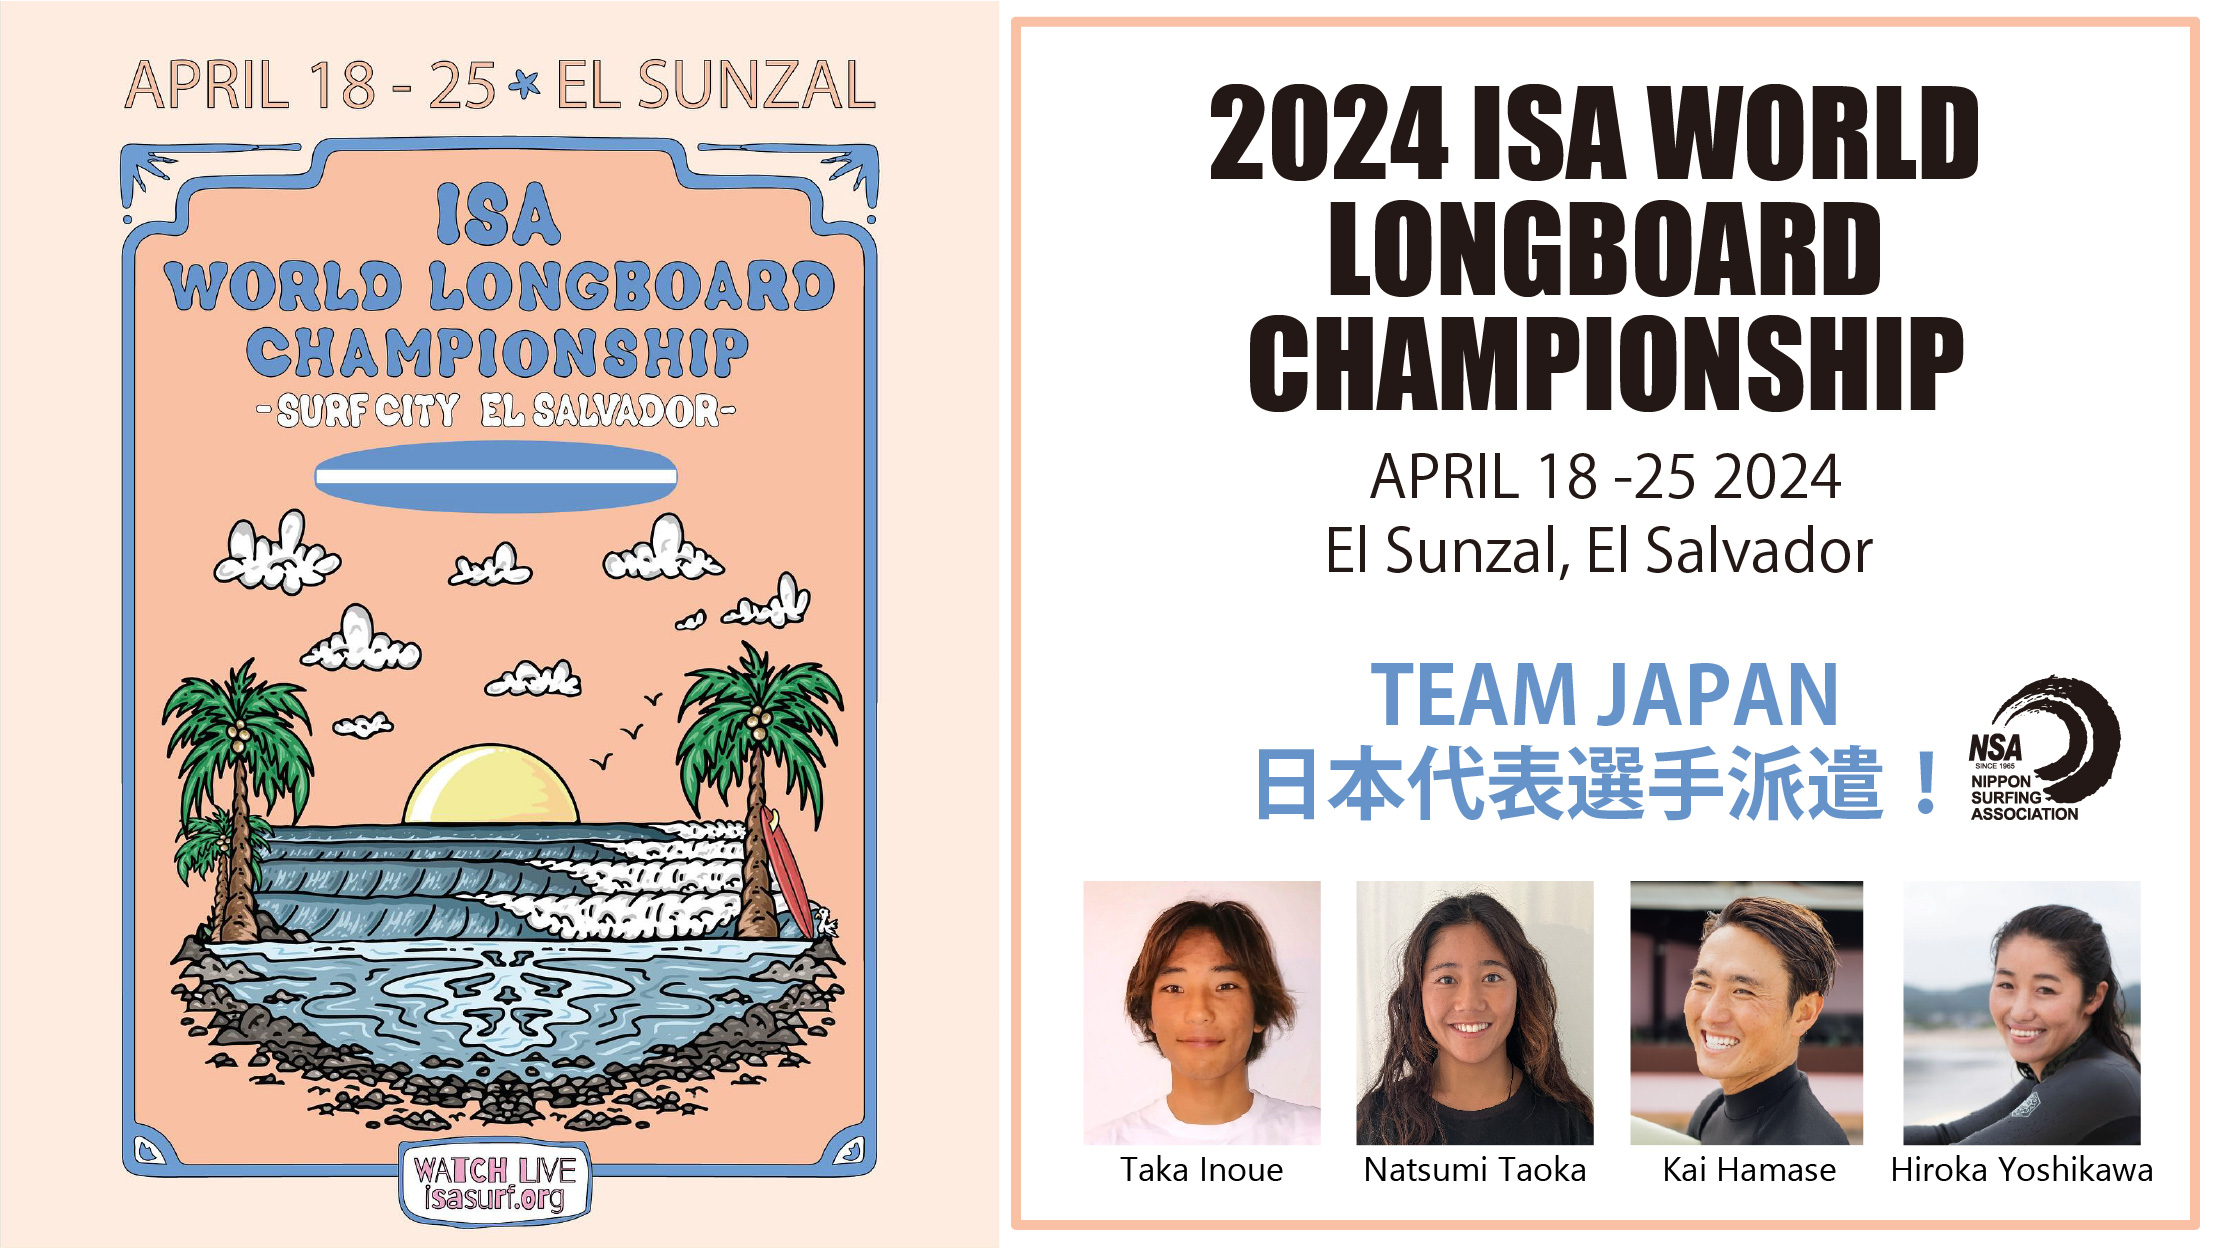 2024 ISA WORLD LONGBOARD SURFING CHAMPIONSHIP